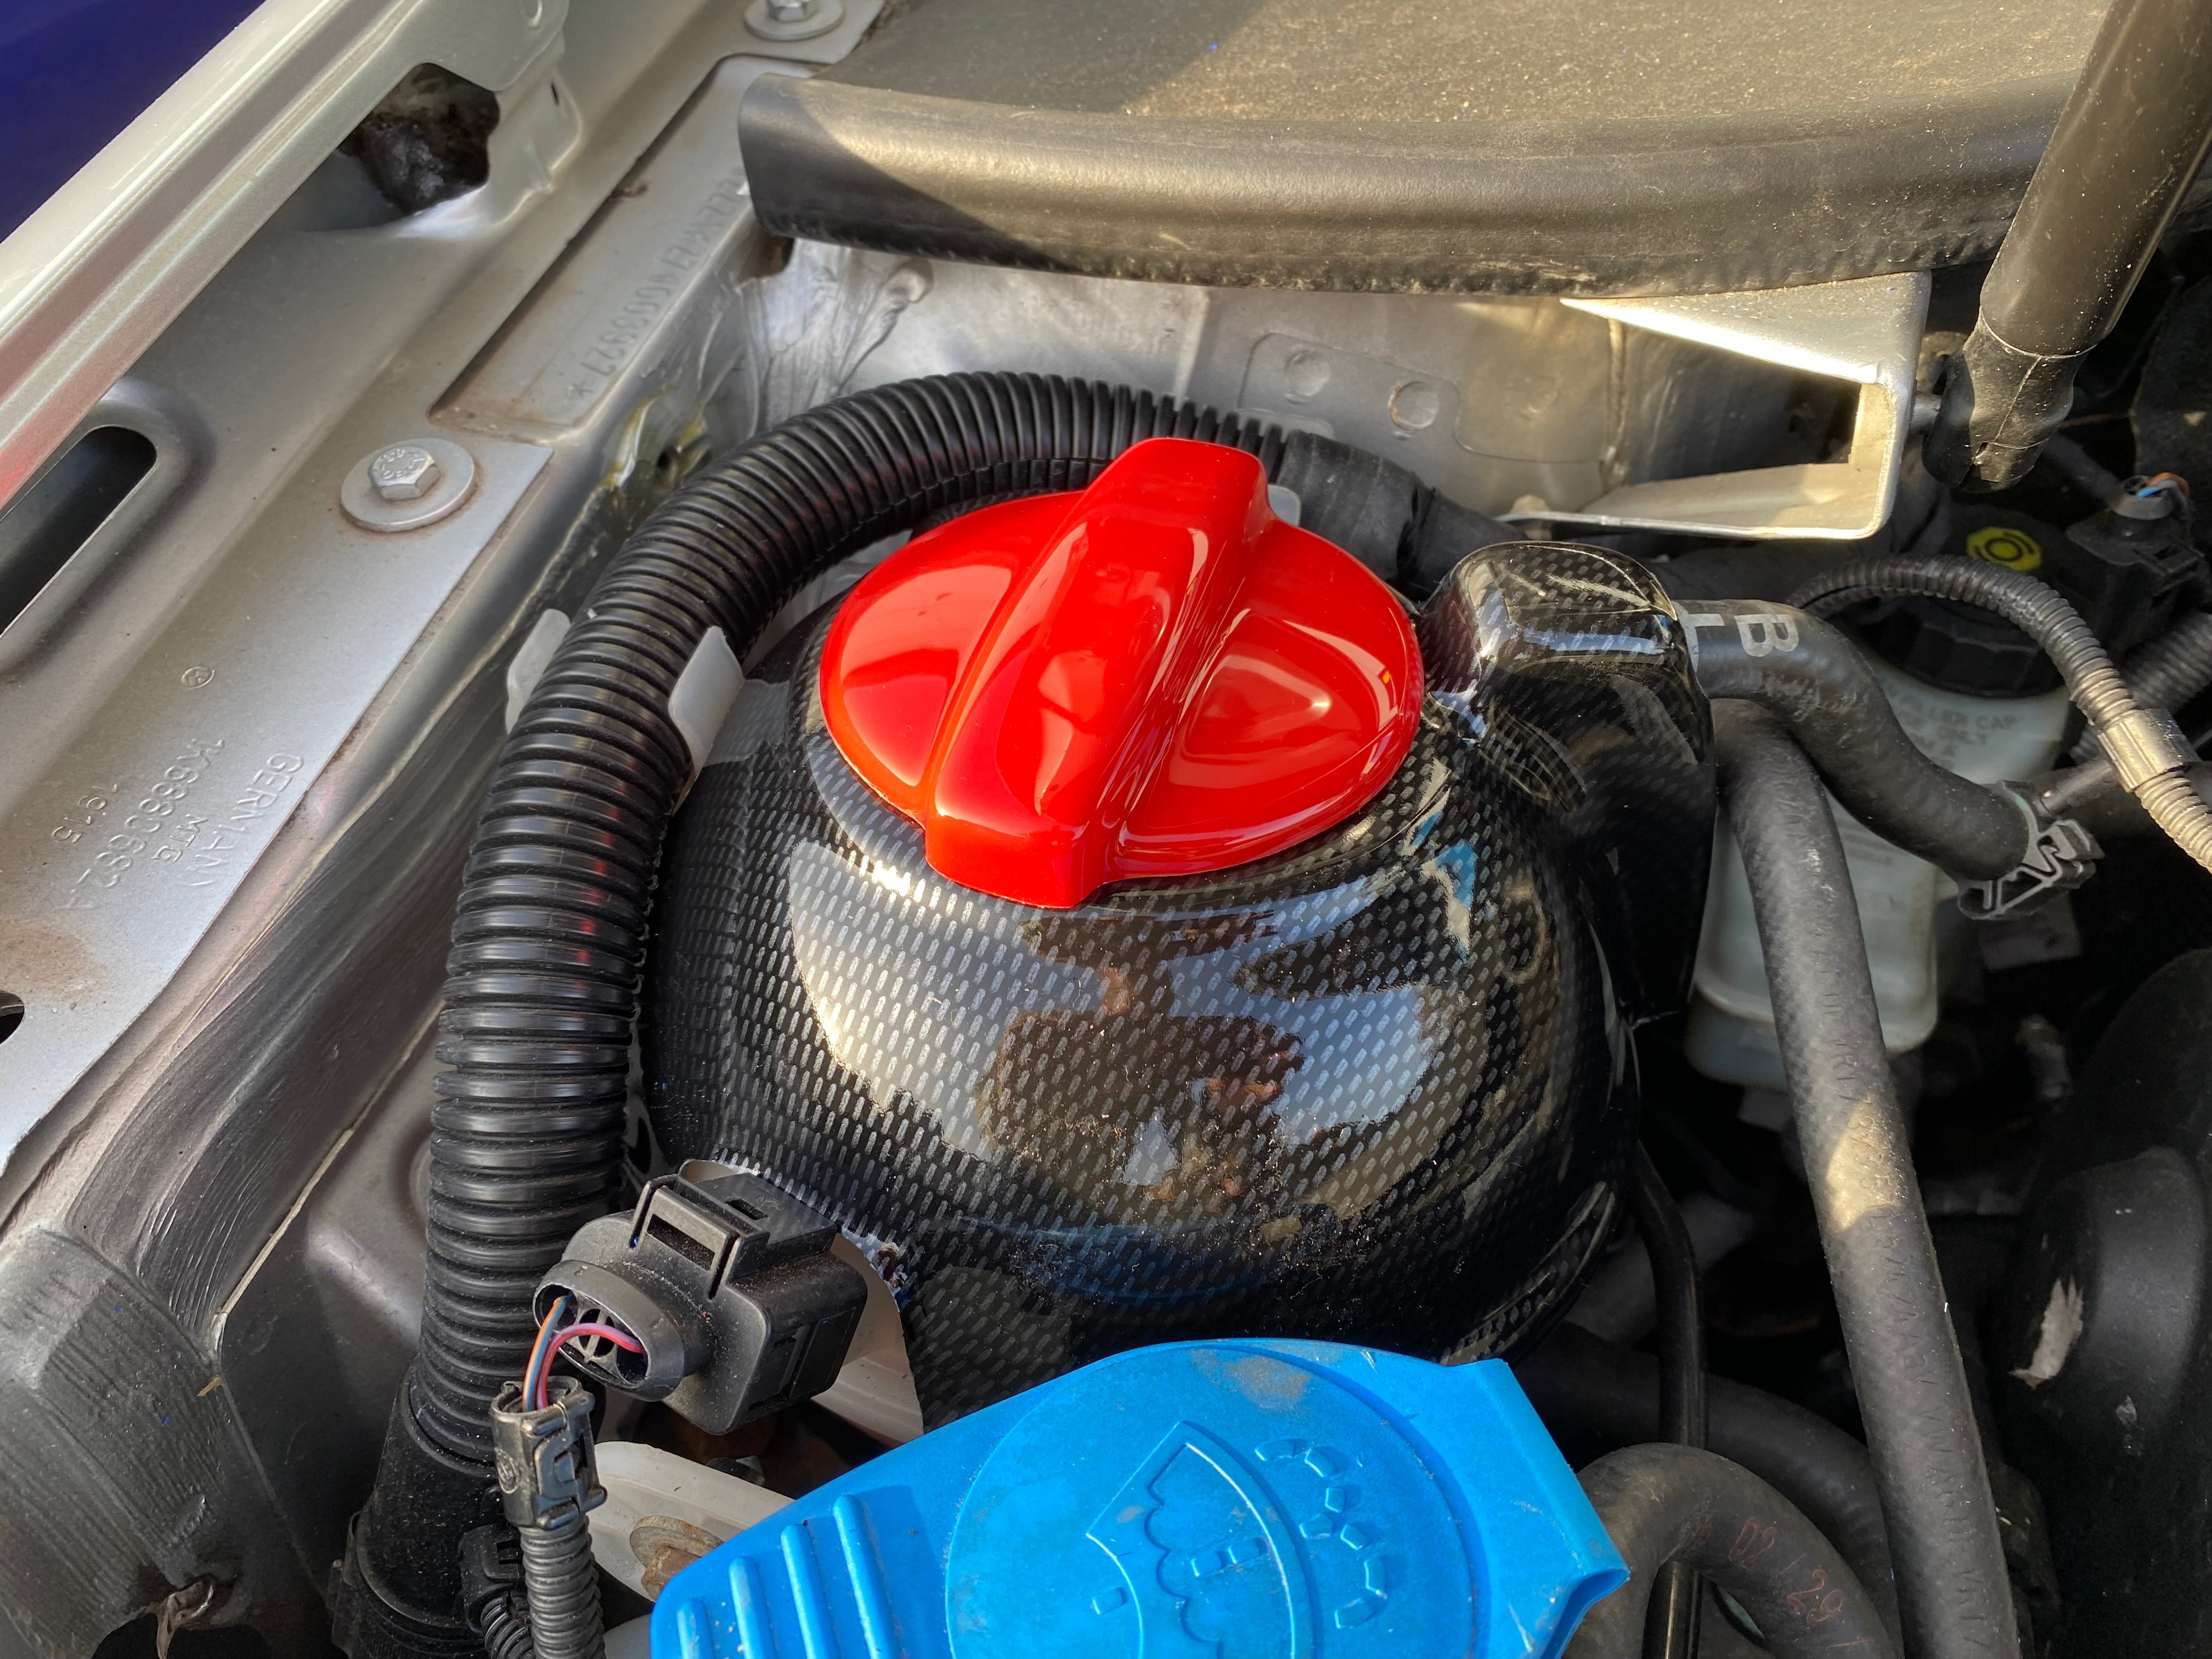 Proform Coolant Cap Cover - Mk6 Volkswagen Golf (Plastic Finishes)